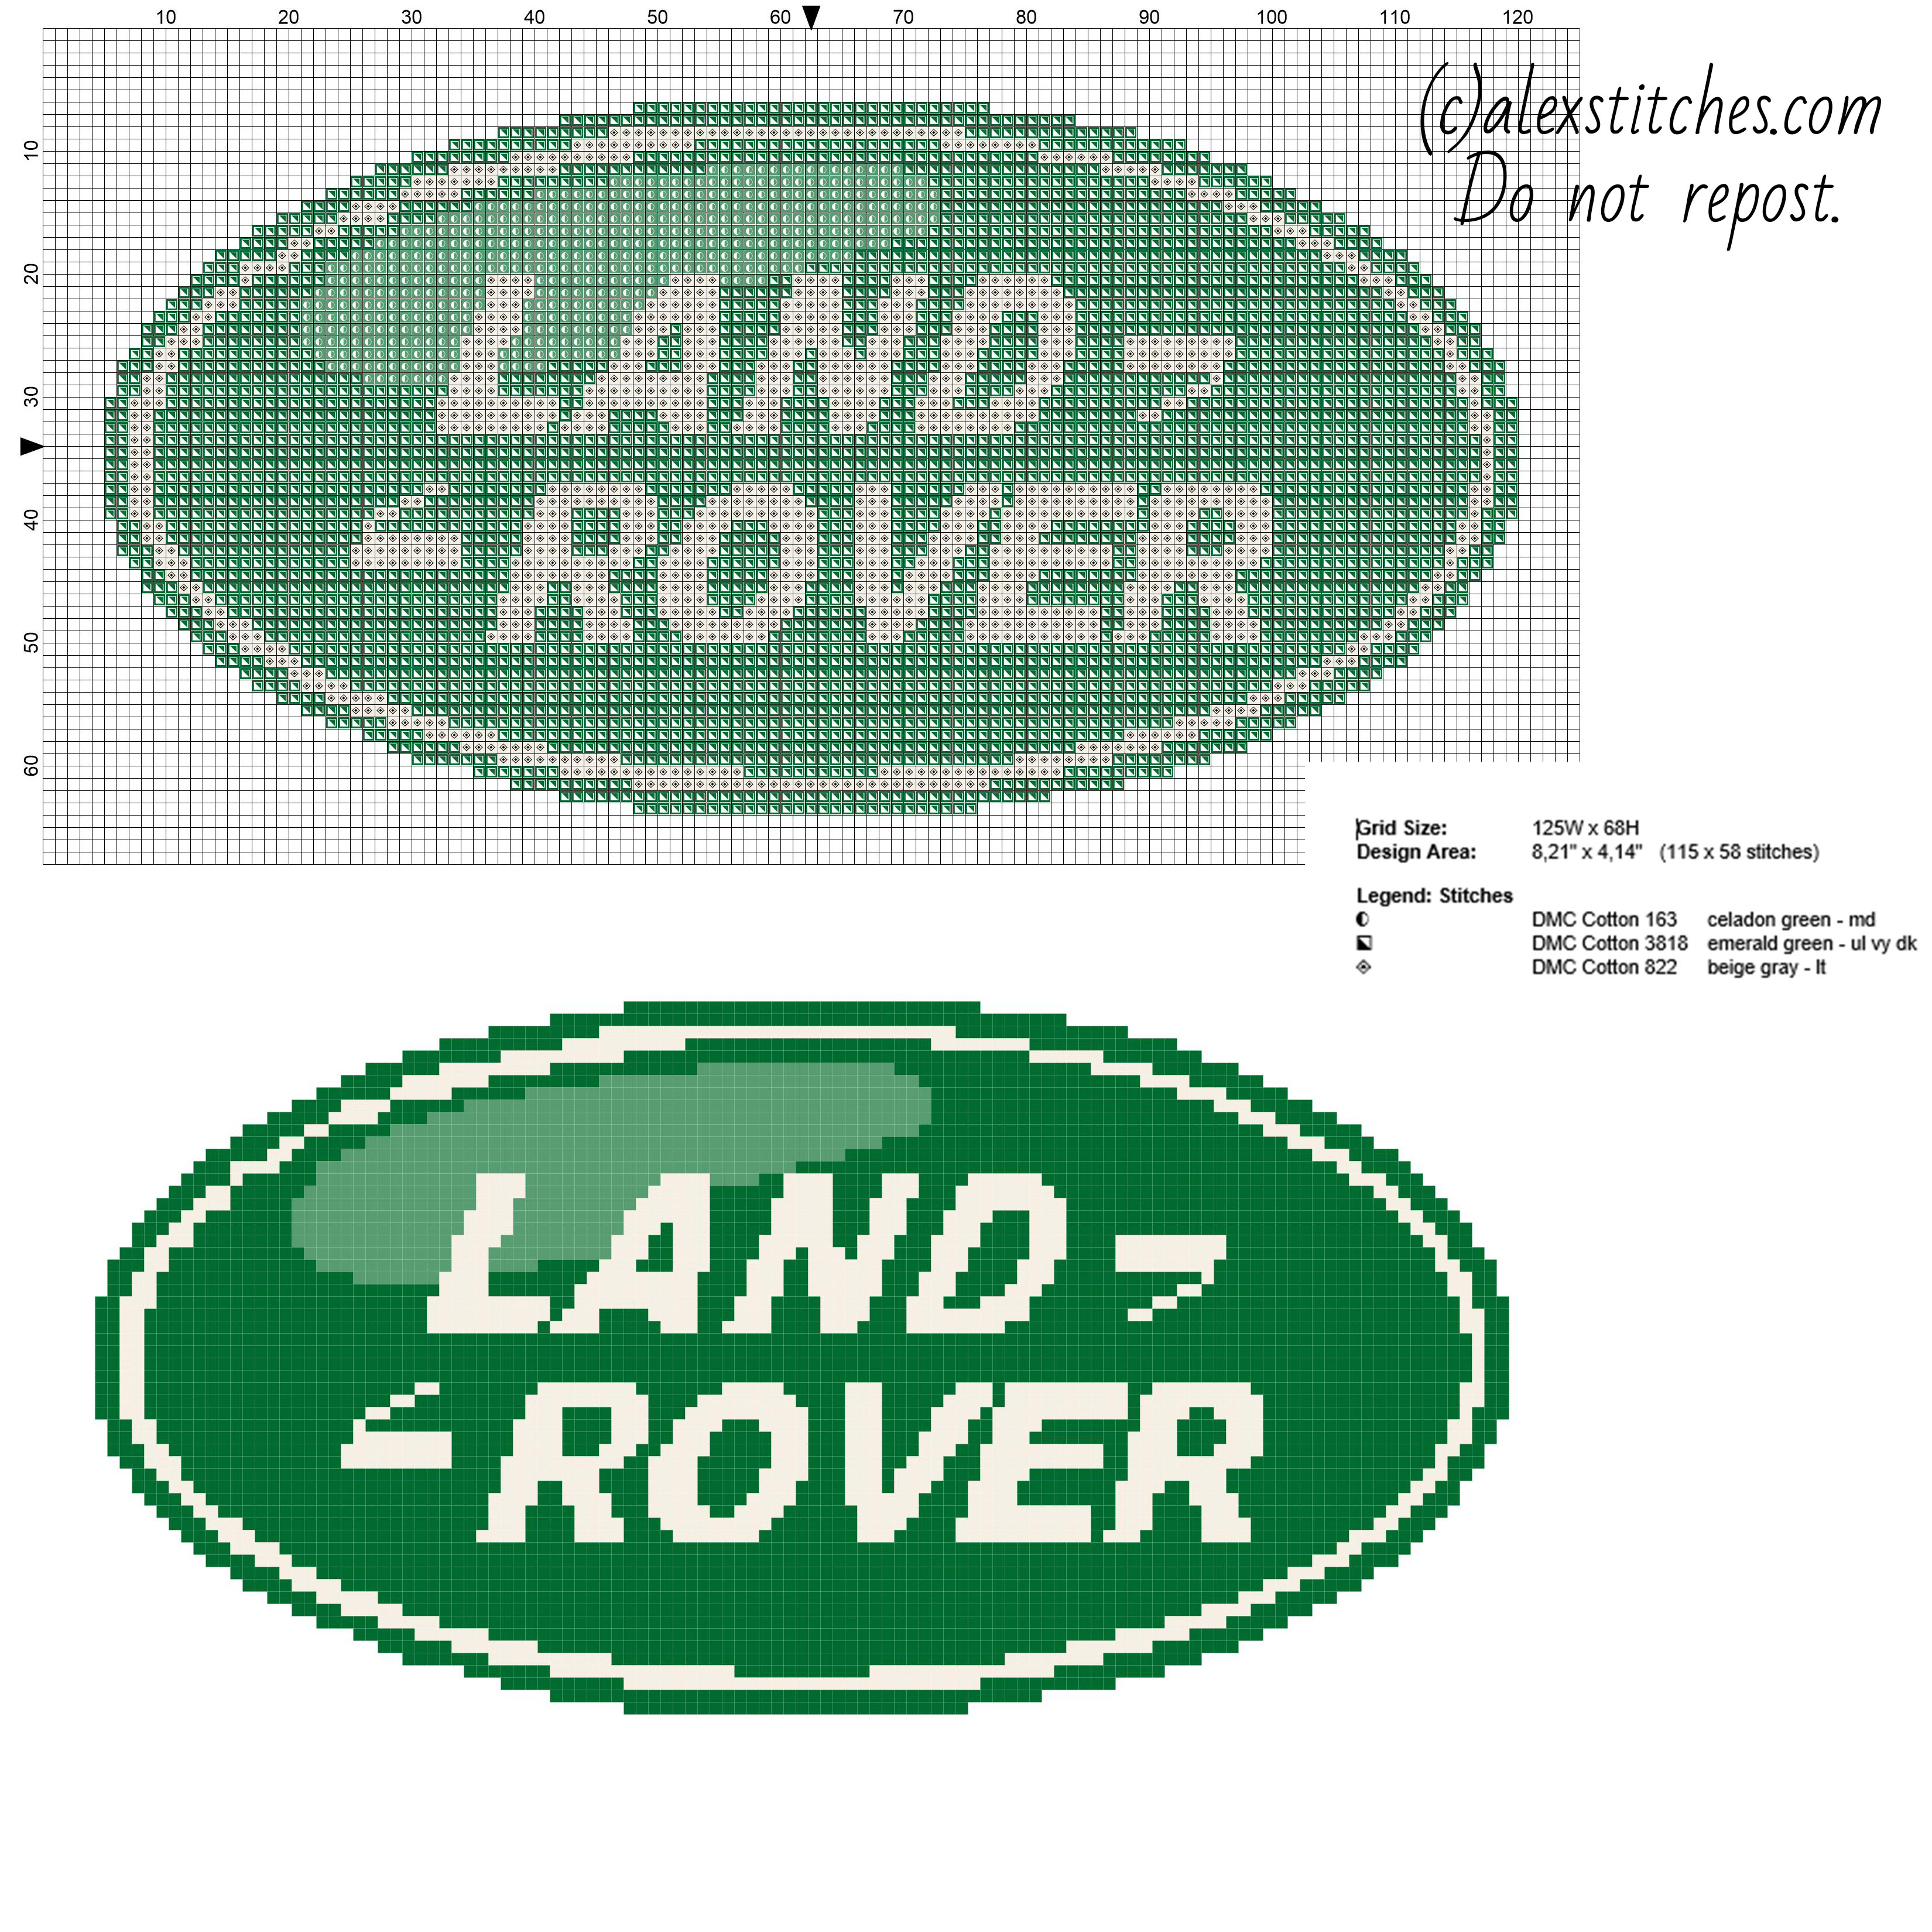 Land Rover car logo free cross stitch pattern